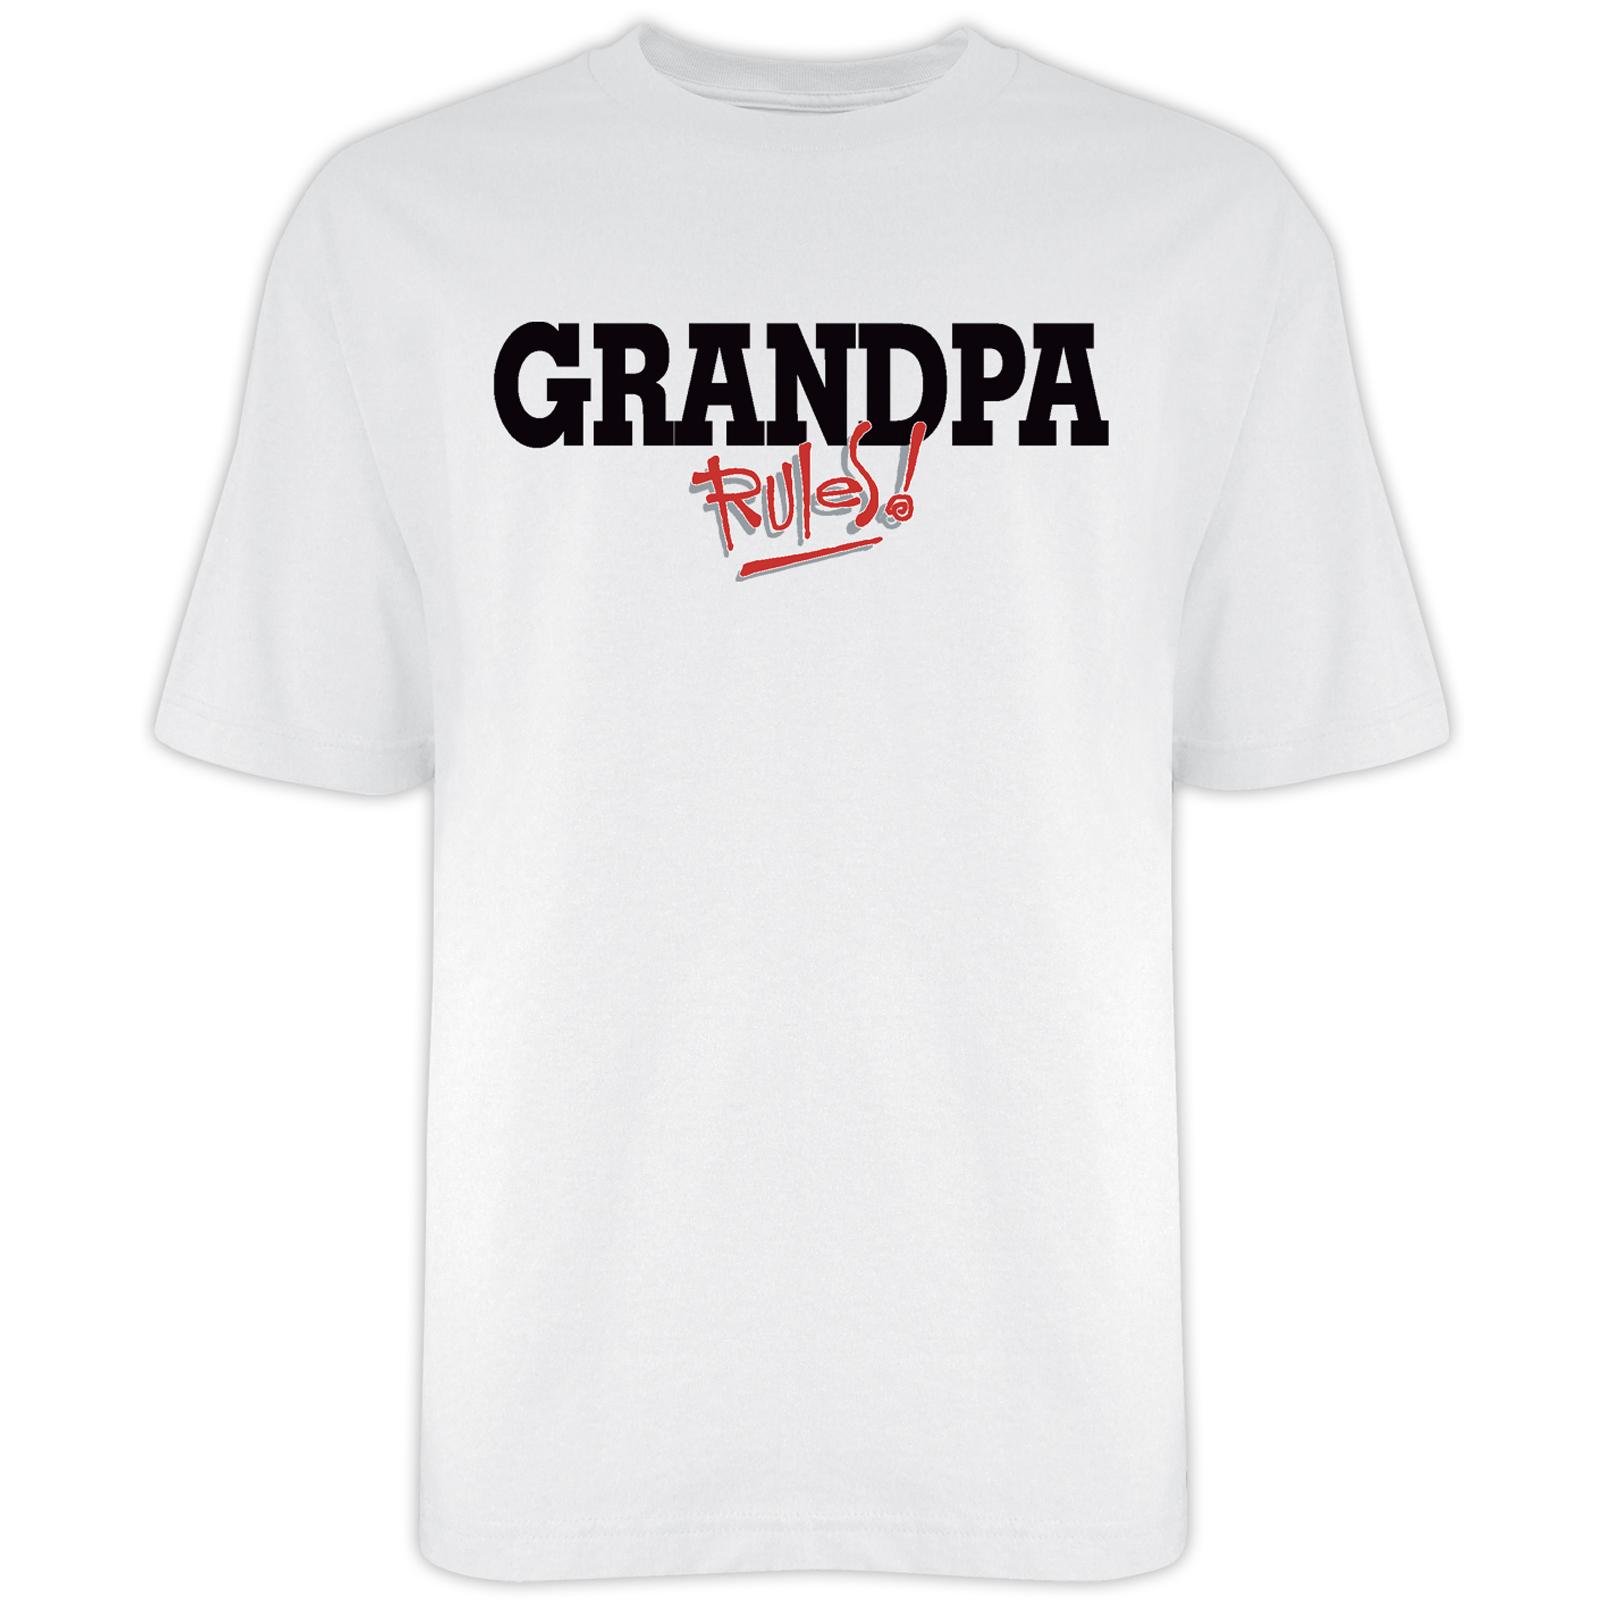 Men's Graphic T-Shirt - Grandpa Rules!